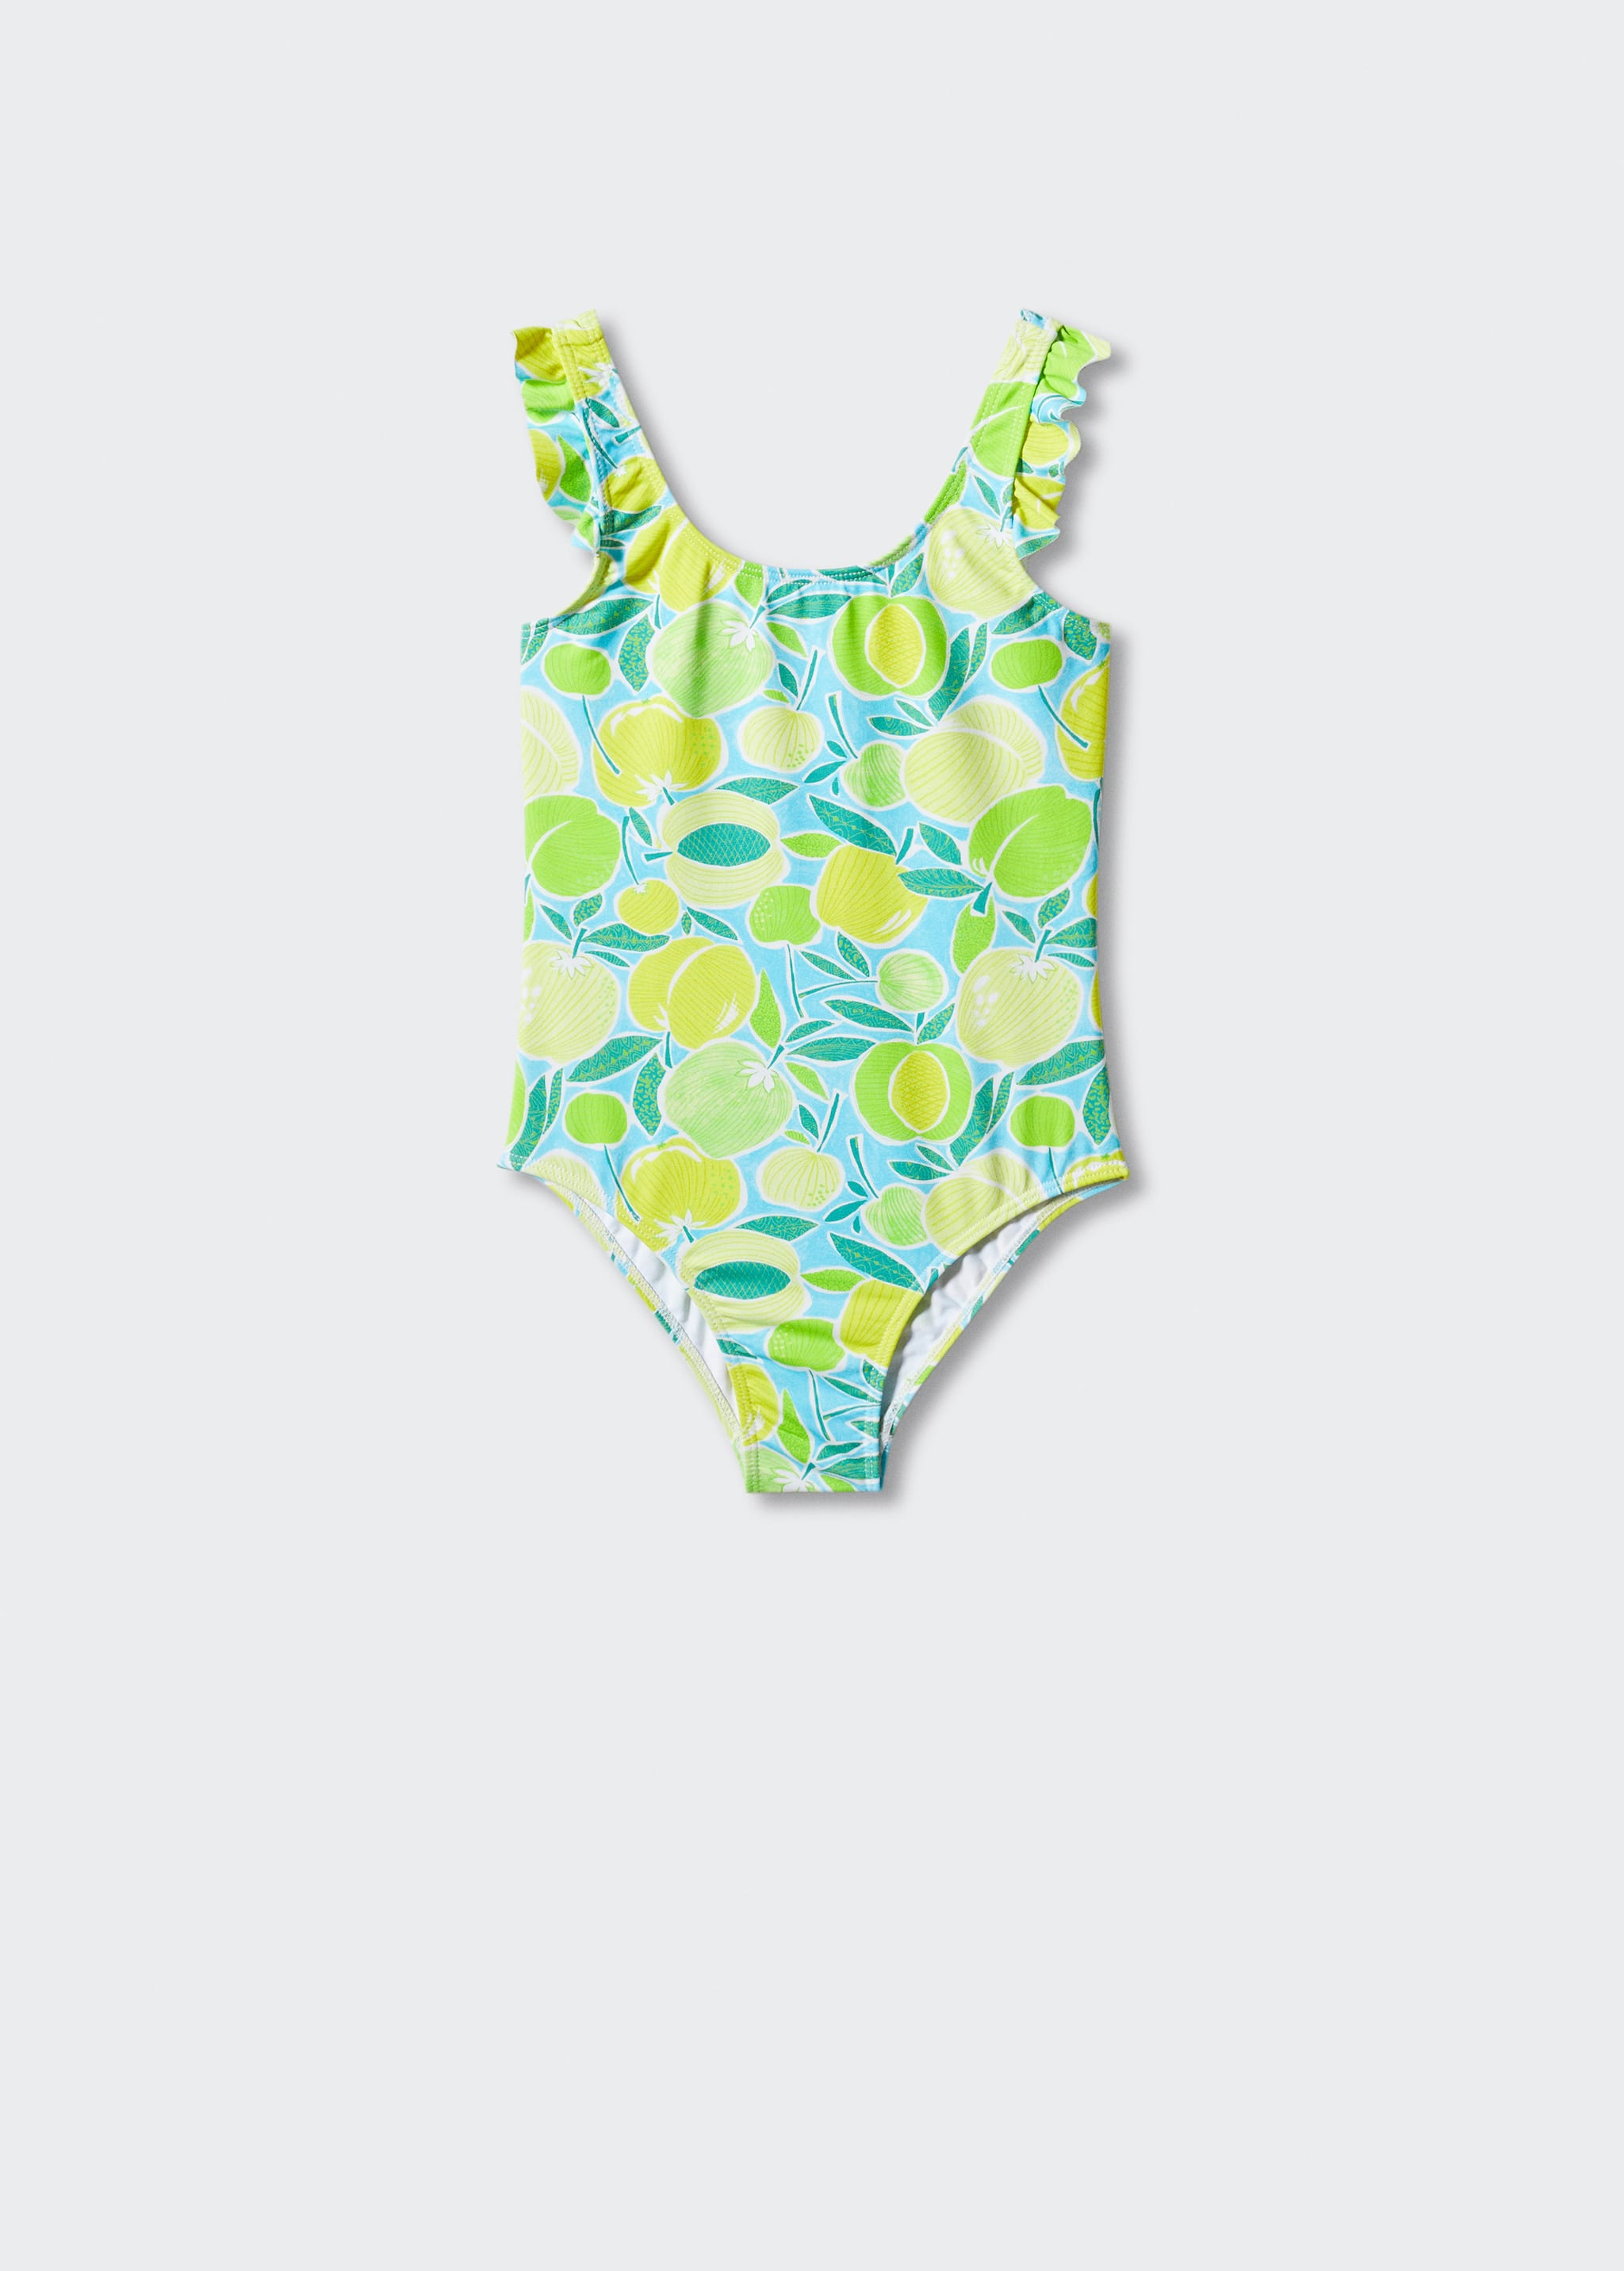 Lemons print swimsuit - Article without model